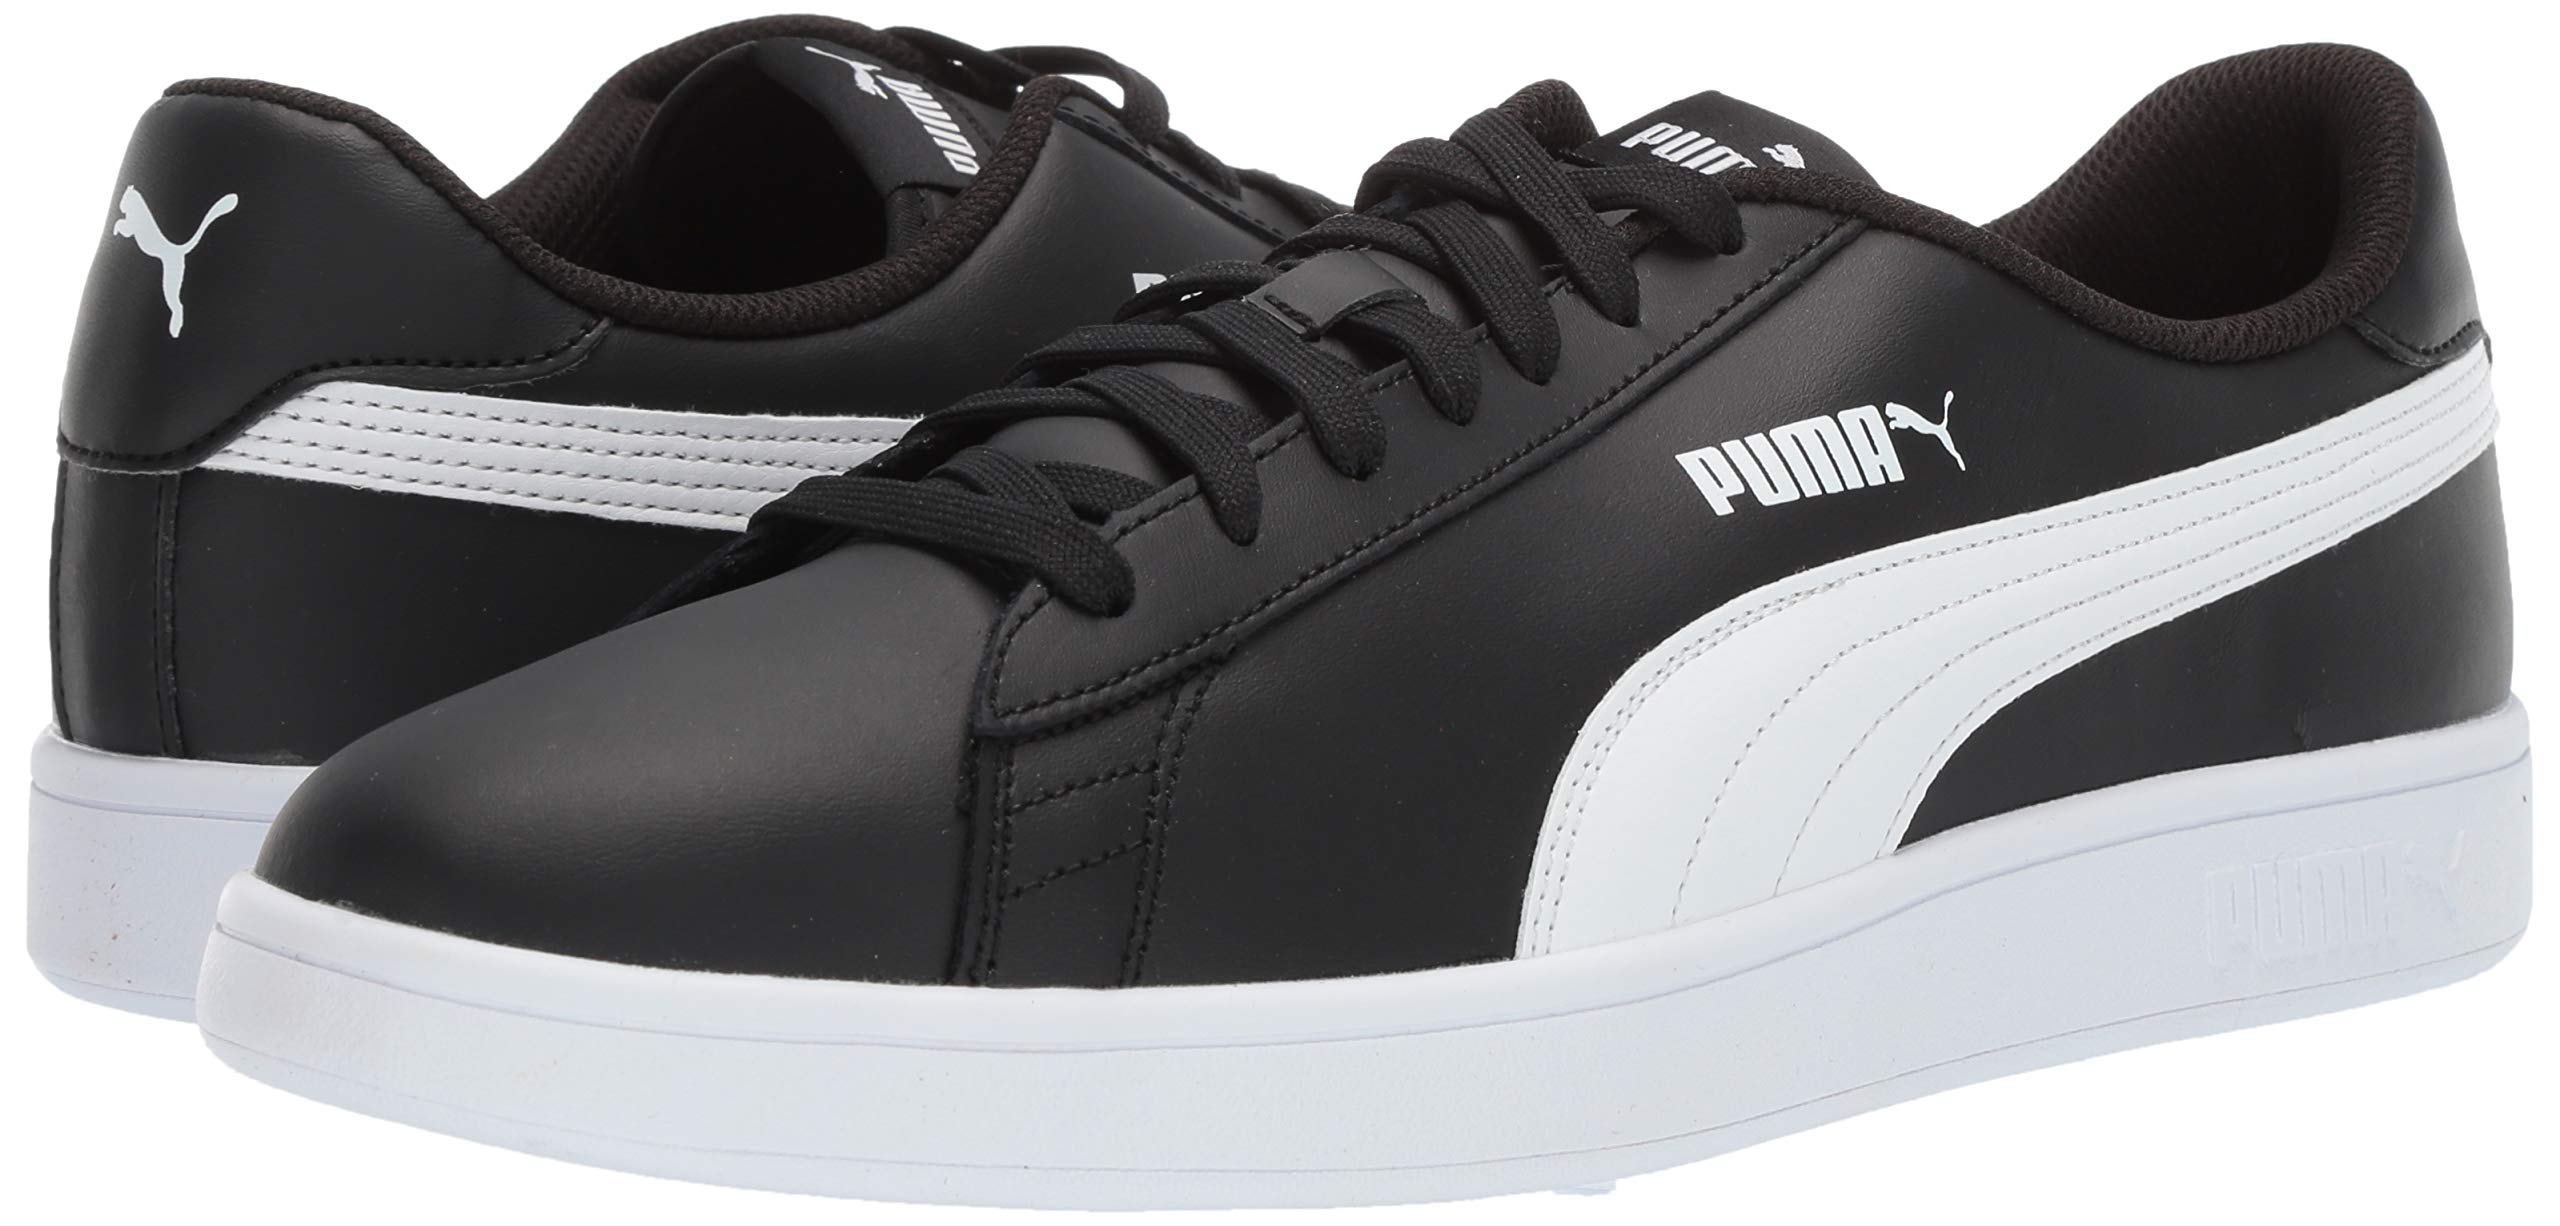 PUMA Men's Smash V2 Casual Sneaker - White or Black Mens Tennis Shoes ...